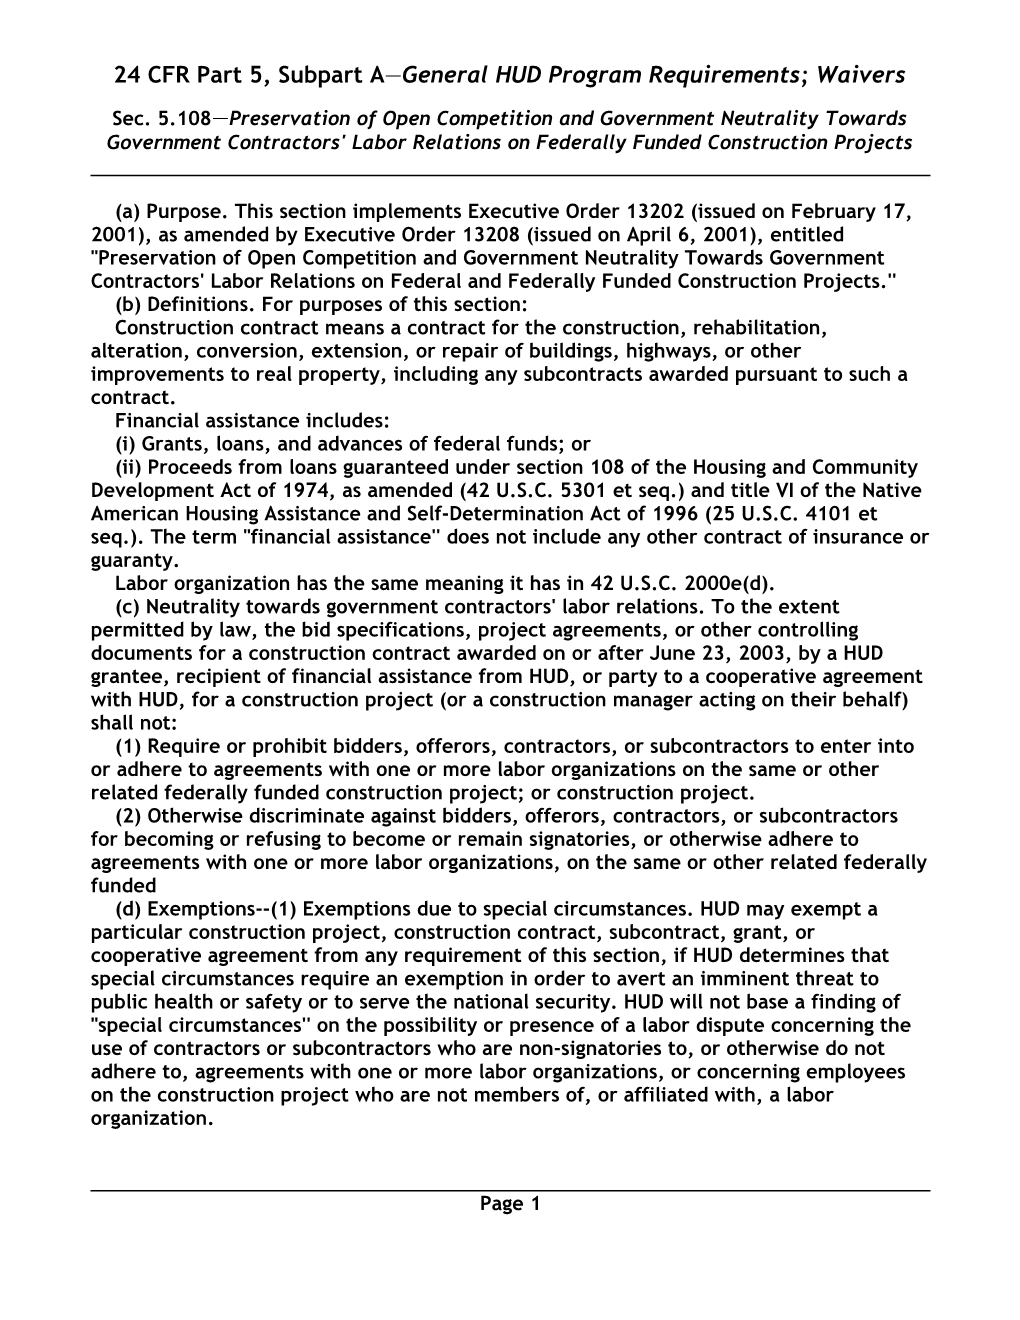 24 CFR Part 5, Subpart a General HUD Program Requirements; Waivers